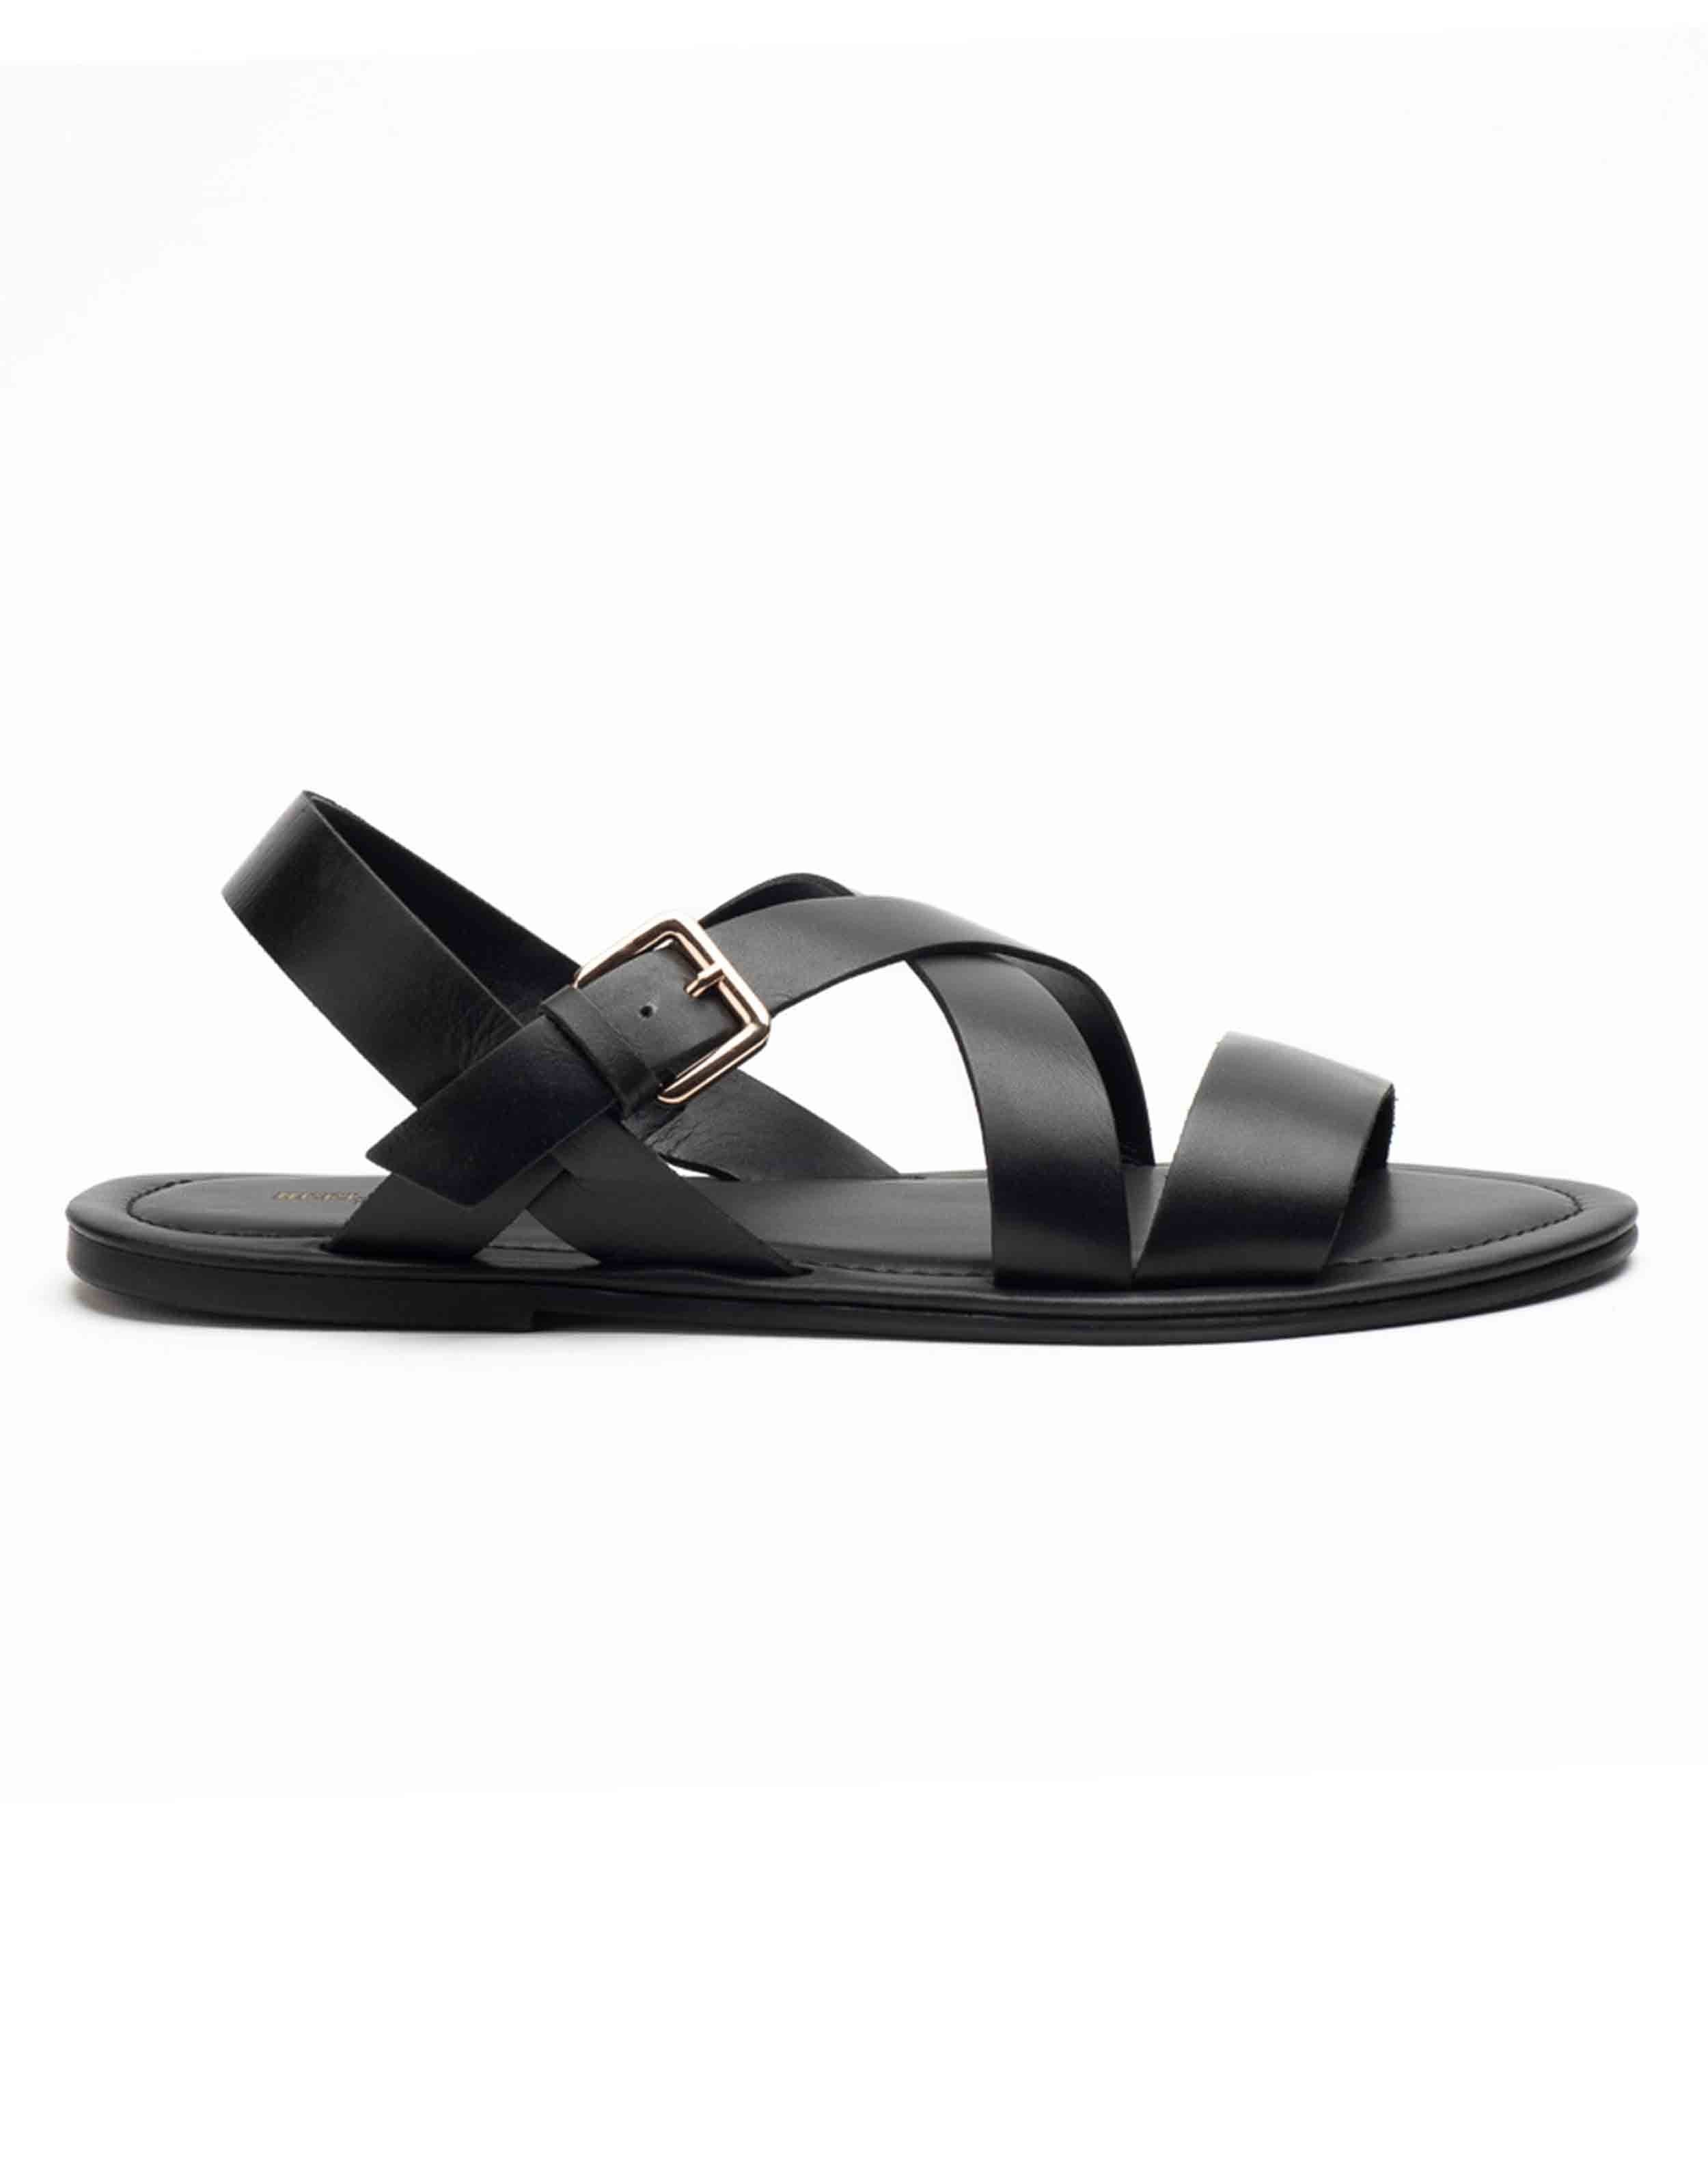 Buy SOLEPLAY Tan Cross Strap Sandals from Westside